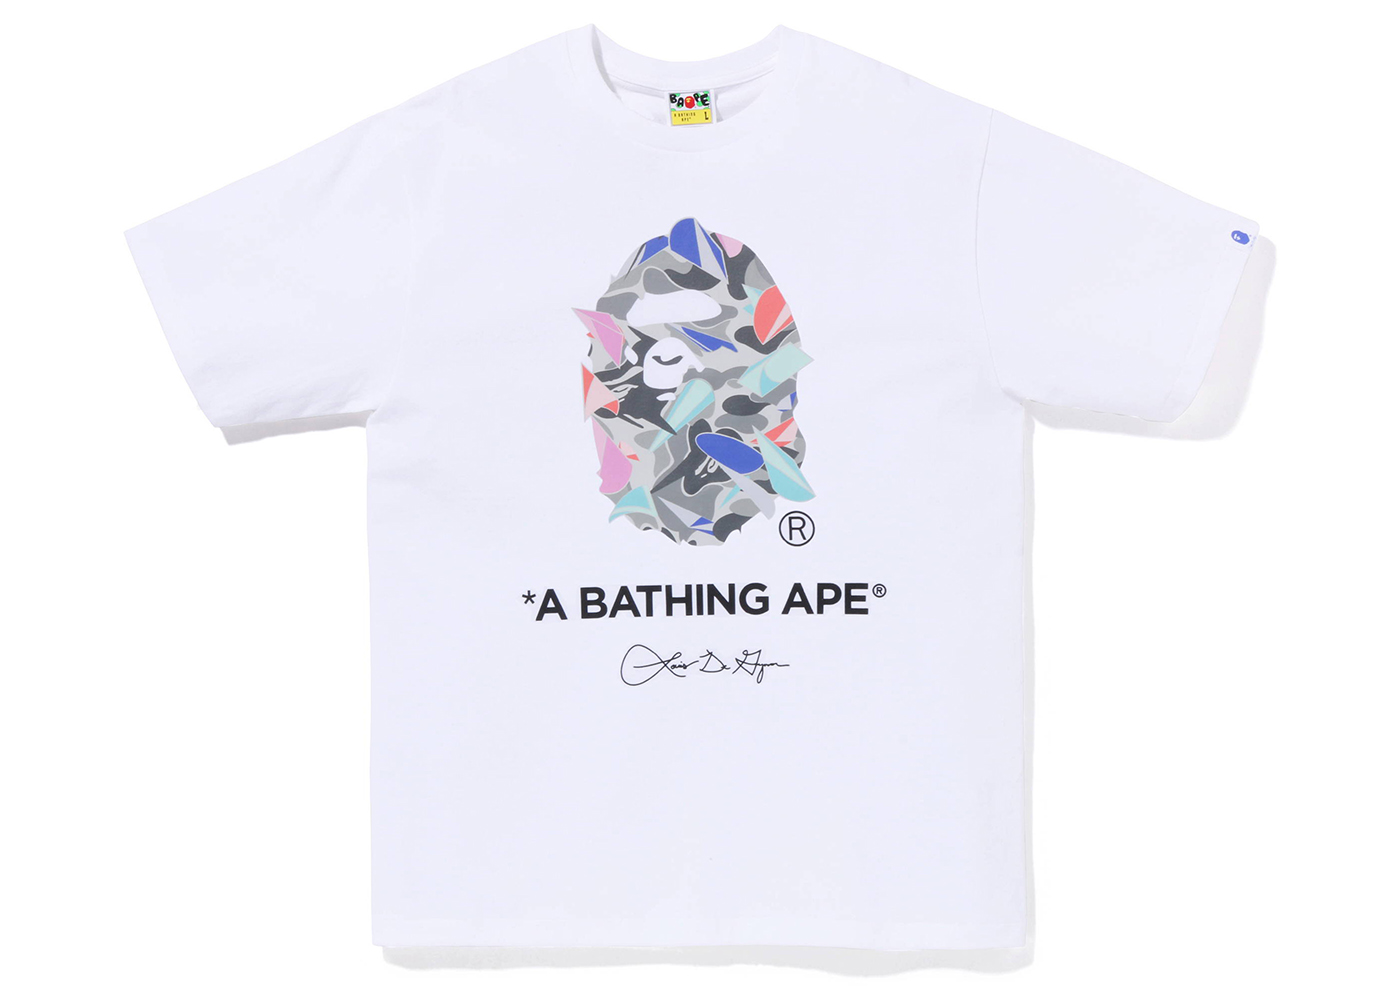 A BATHING APE xLOUIS DE GUZMAN Tee White - csihealth.net